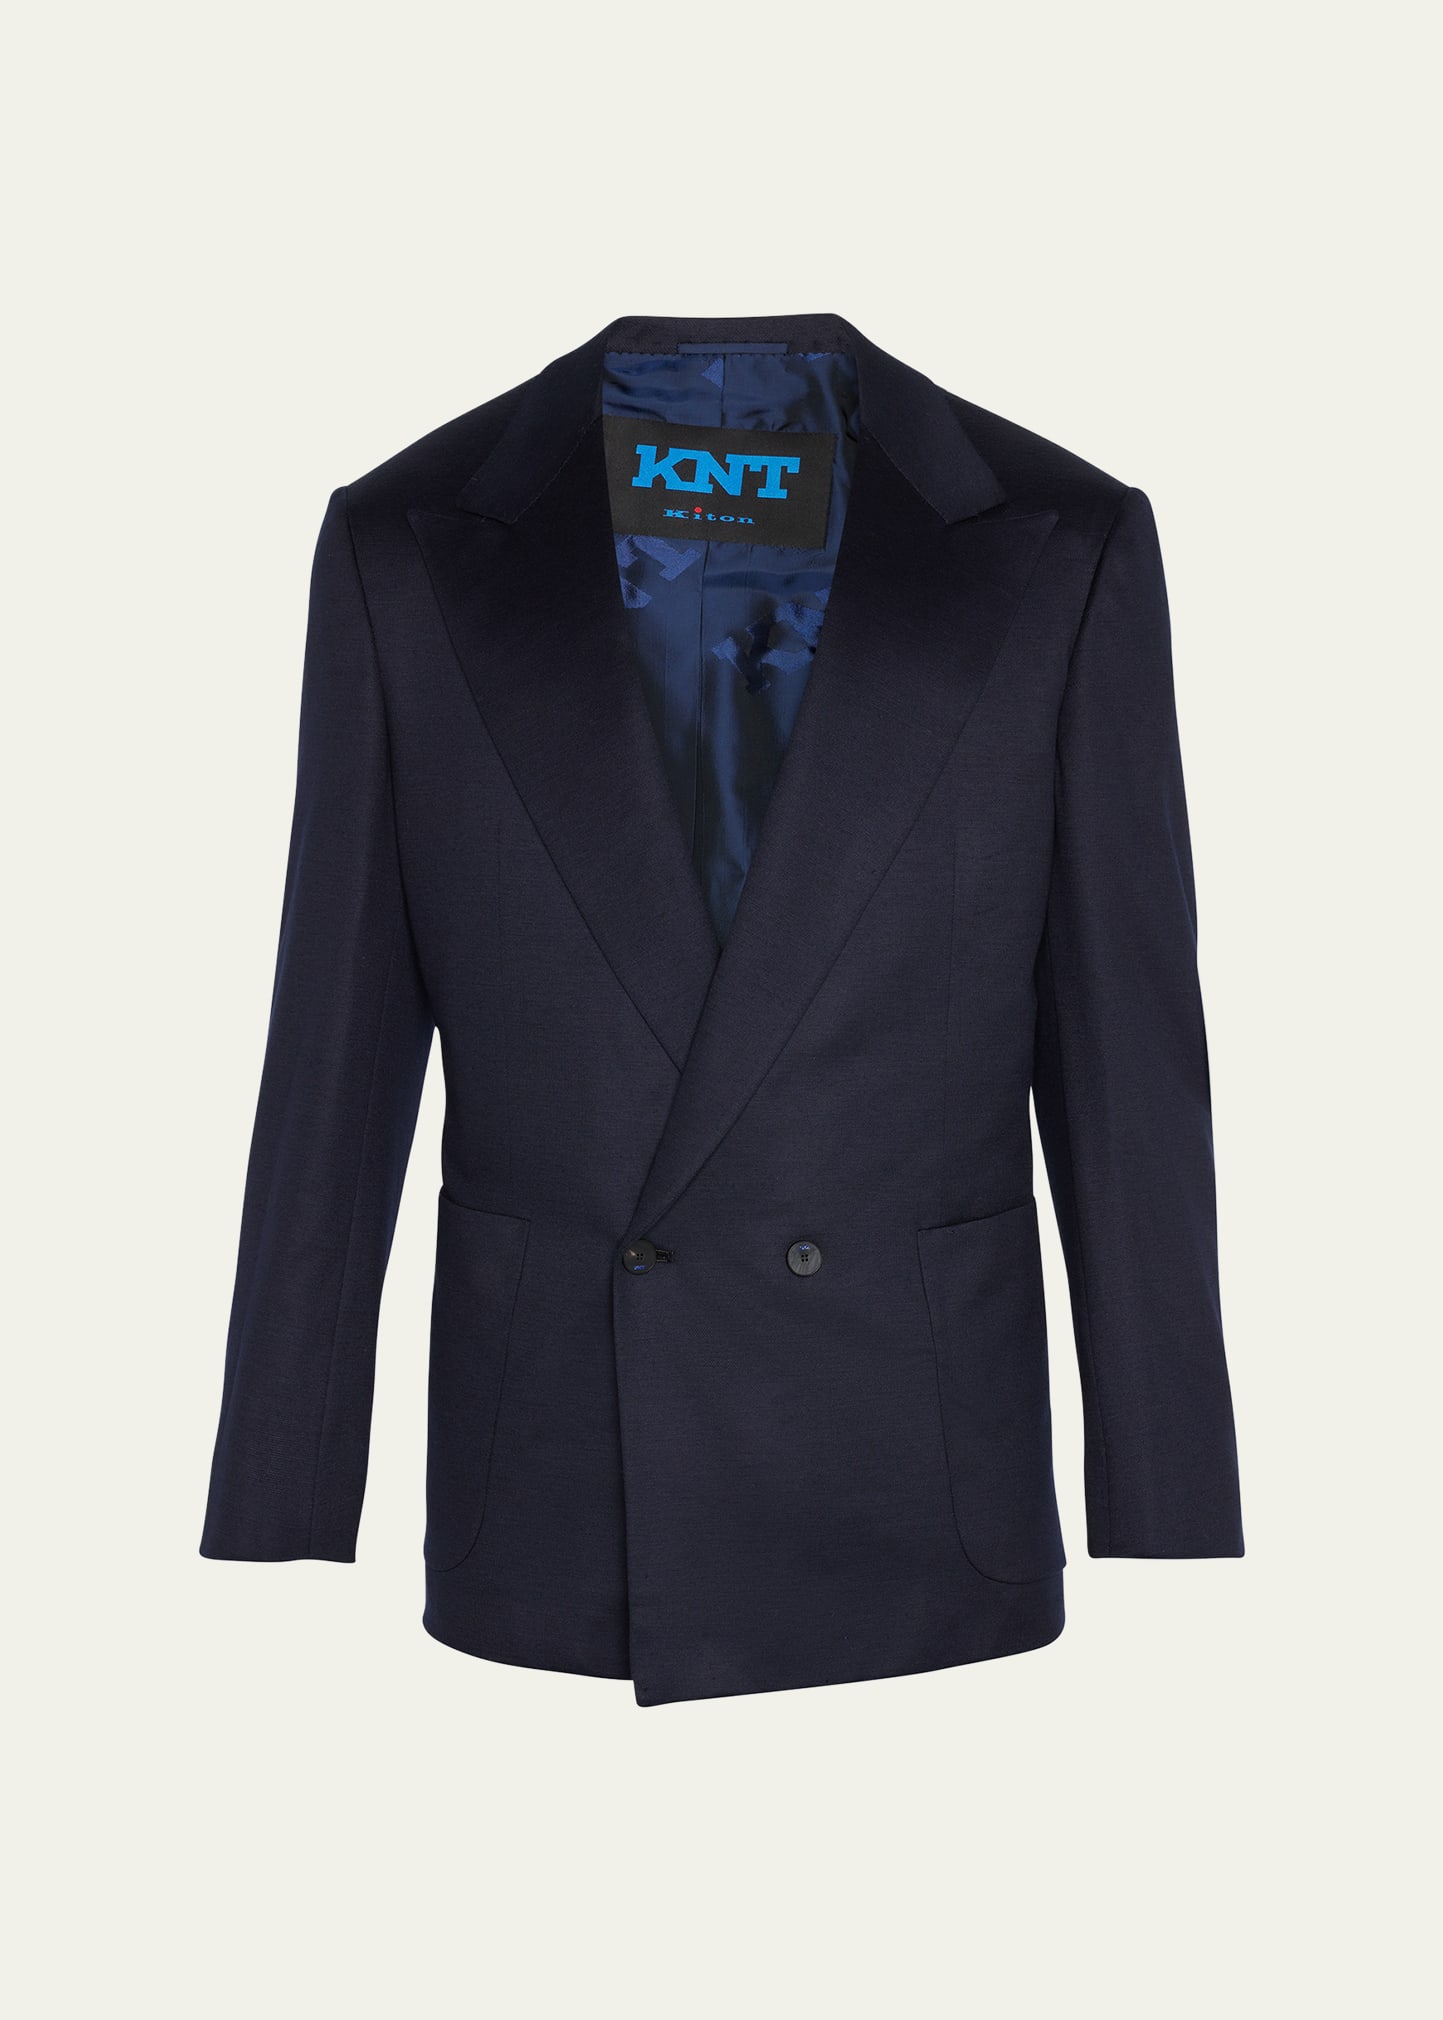 Knt Men's Double-breasted Wool Sport Jacket In Blue